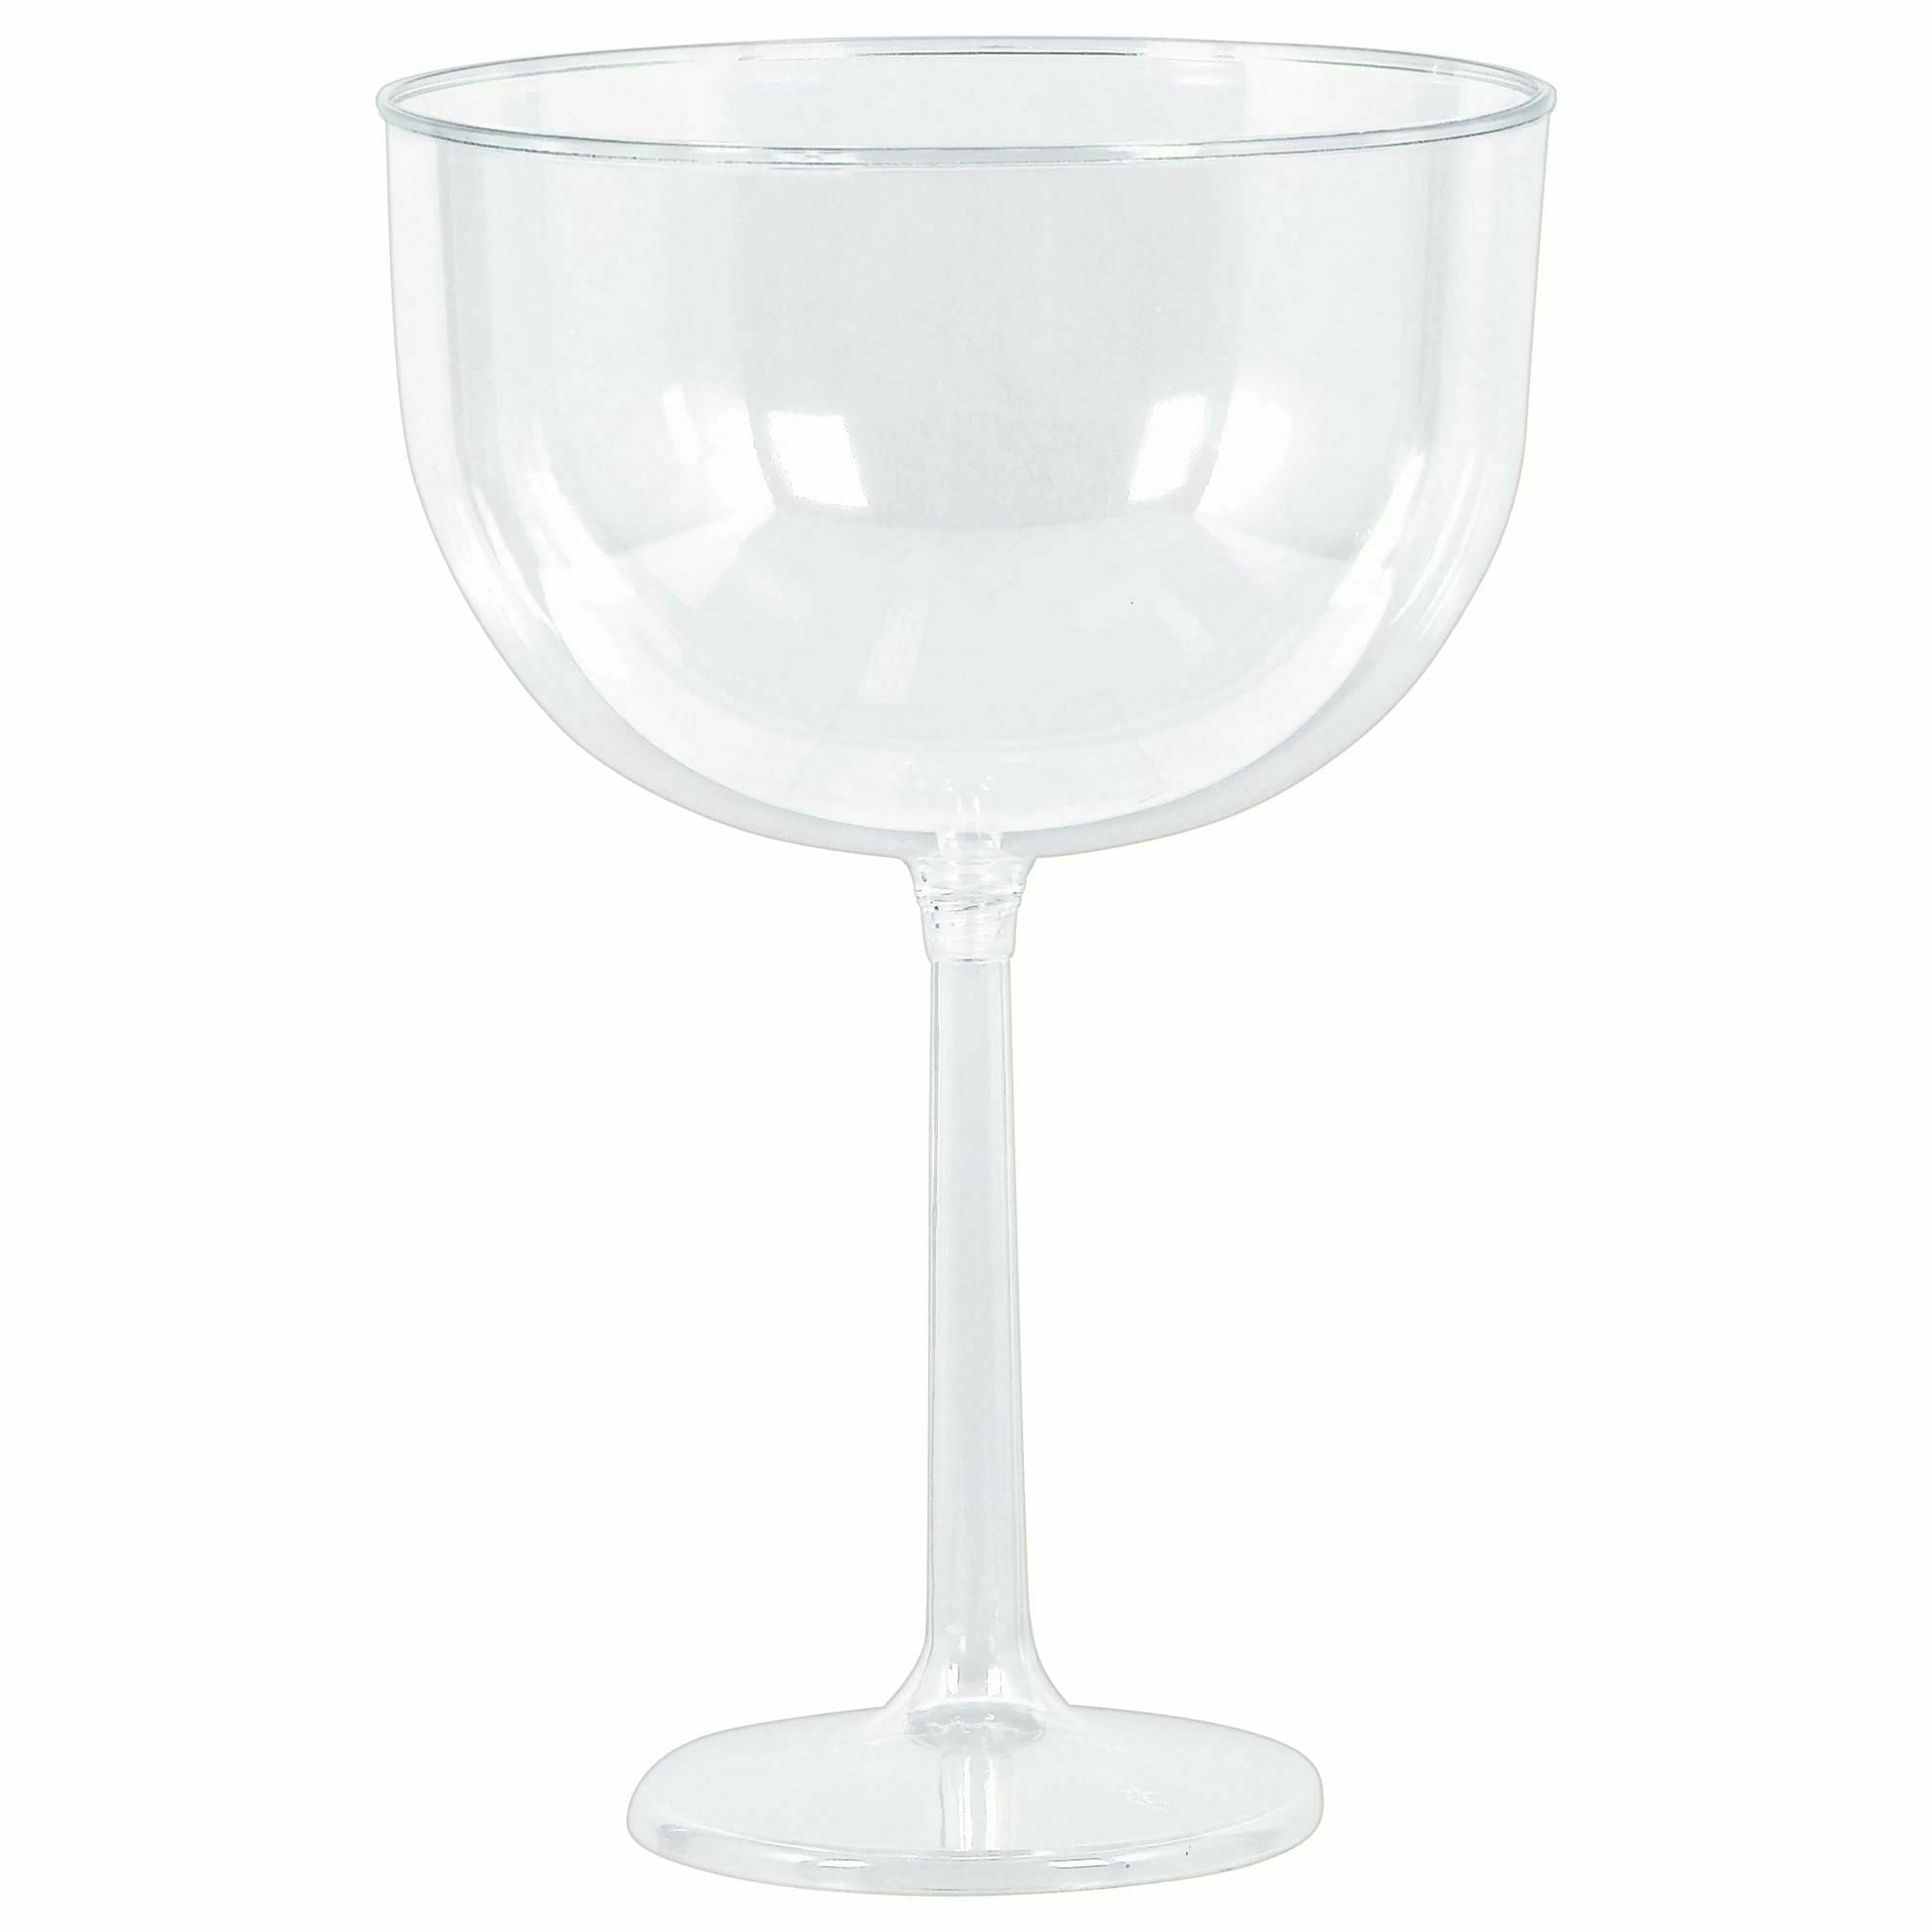 Amscan BASIC Jumbo Wine Glass Drinkware Set